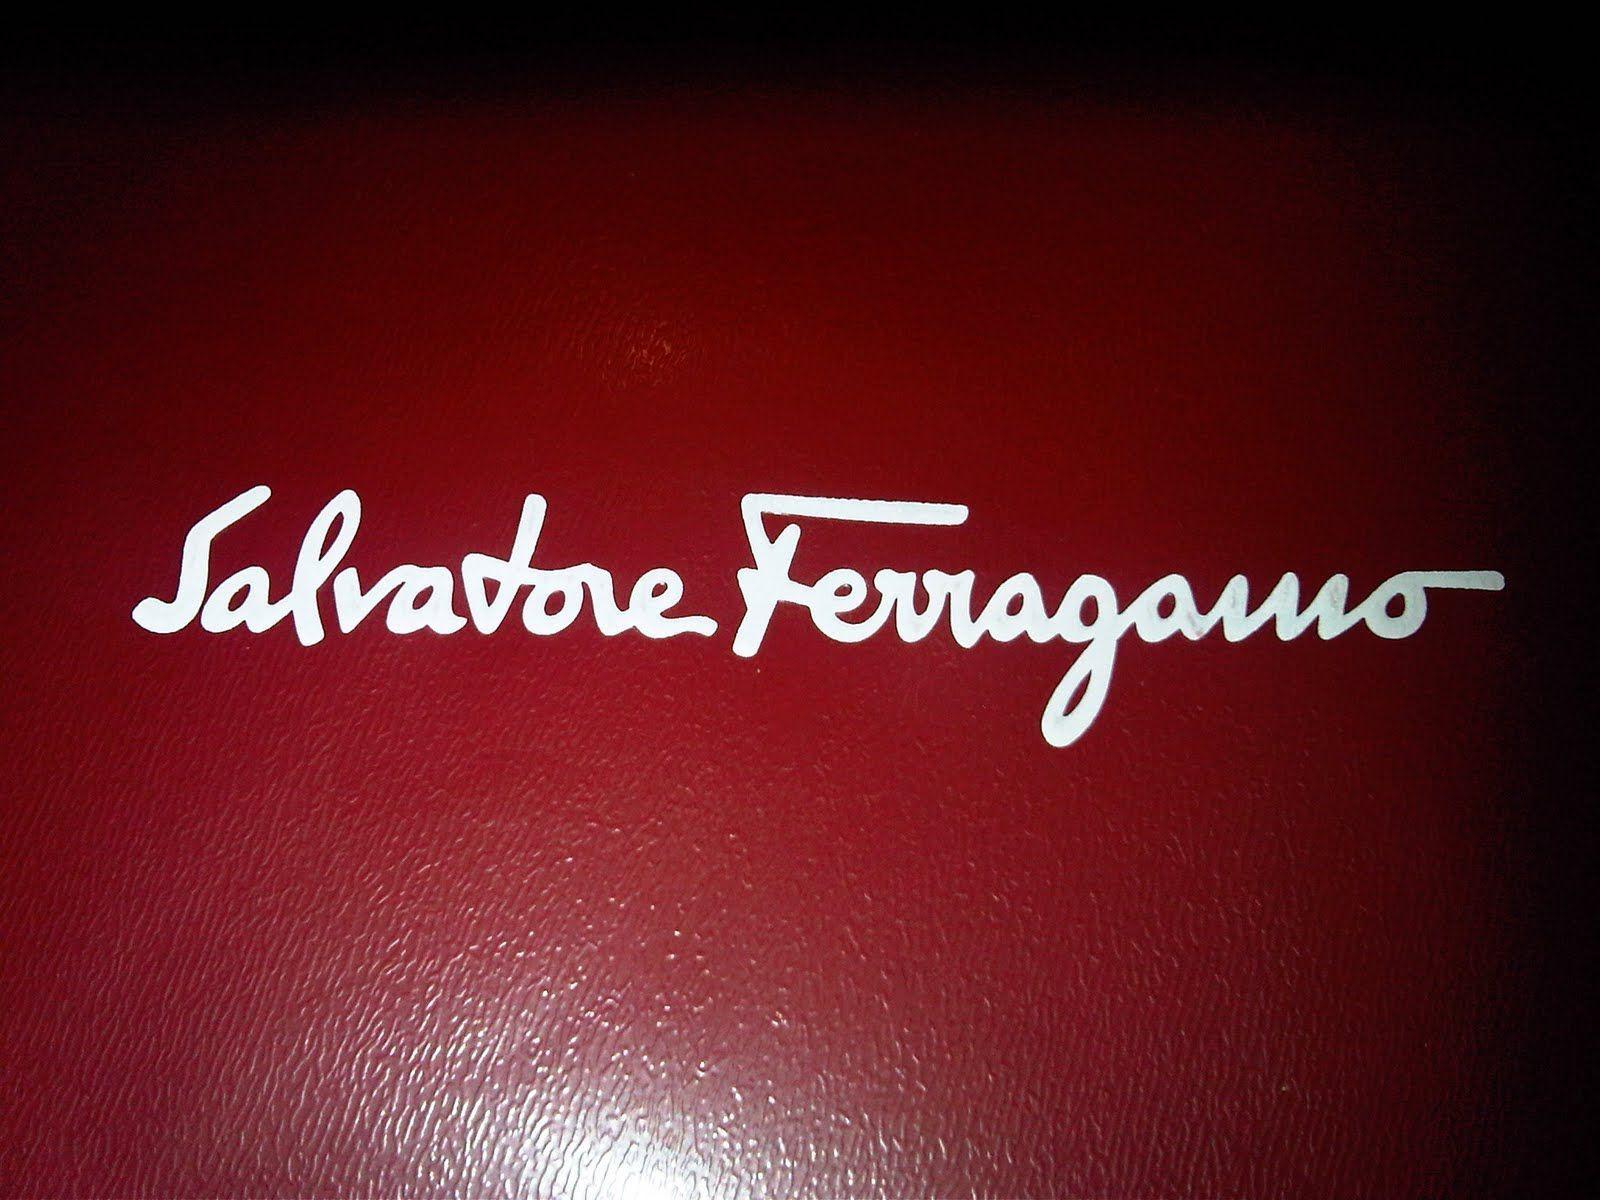 Ferragamo Logo Wallpapers - Top Free Ferragamo Logo Backgrounds ...